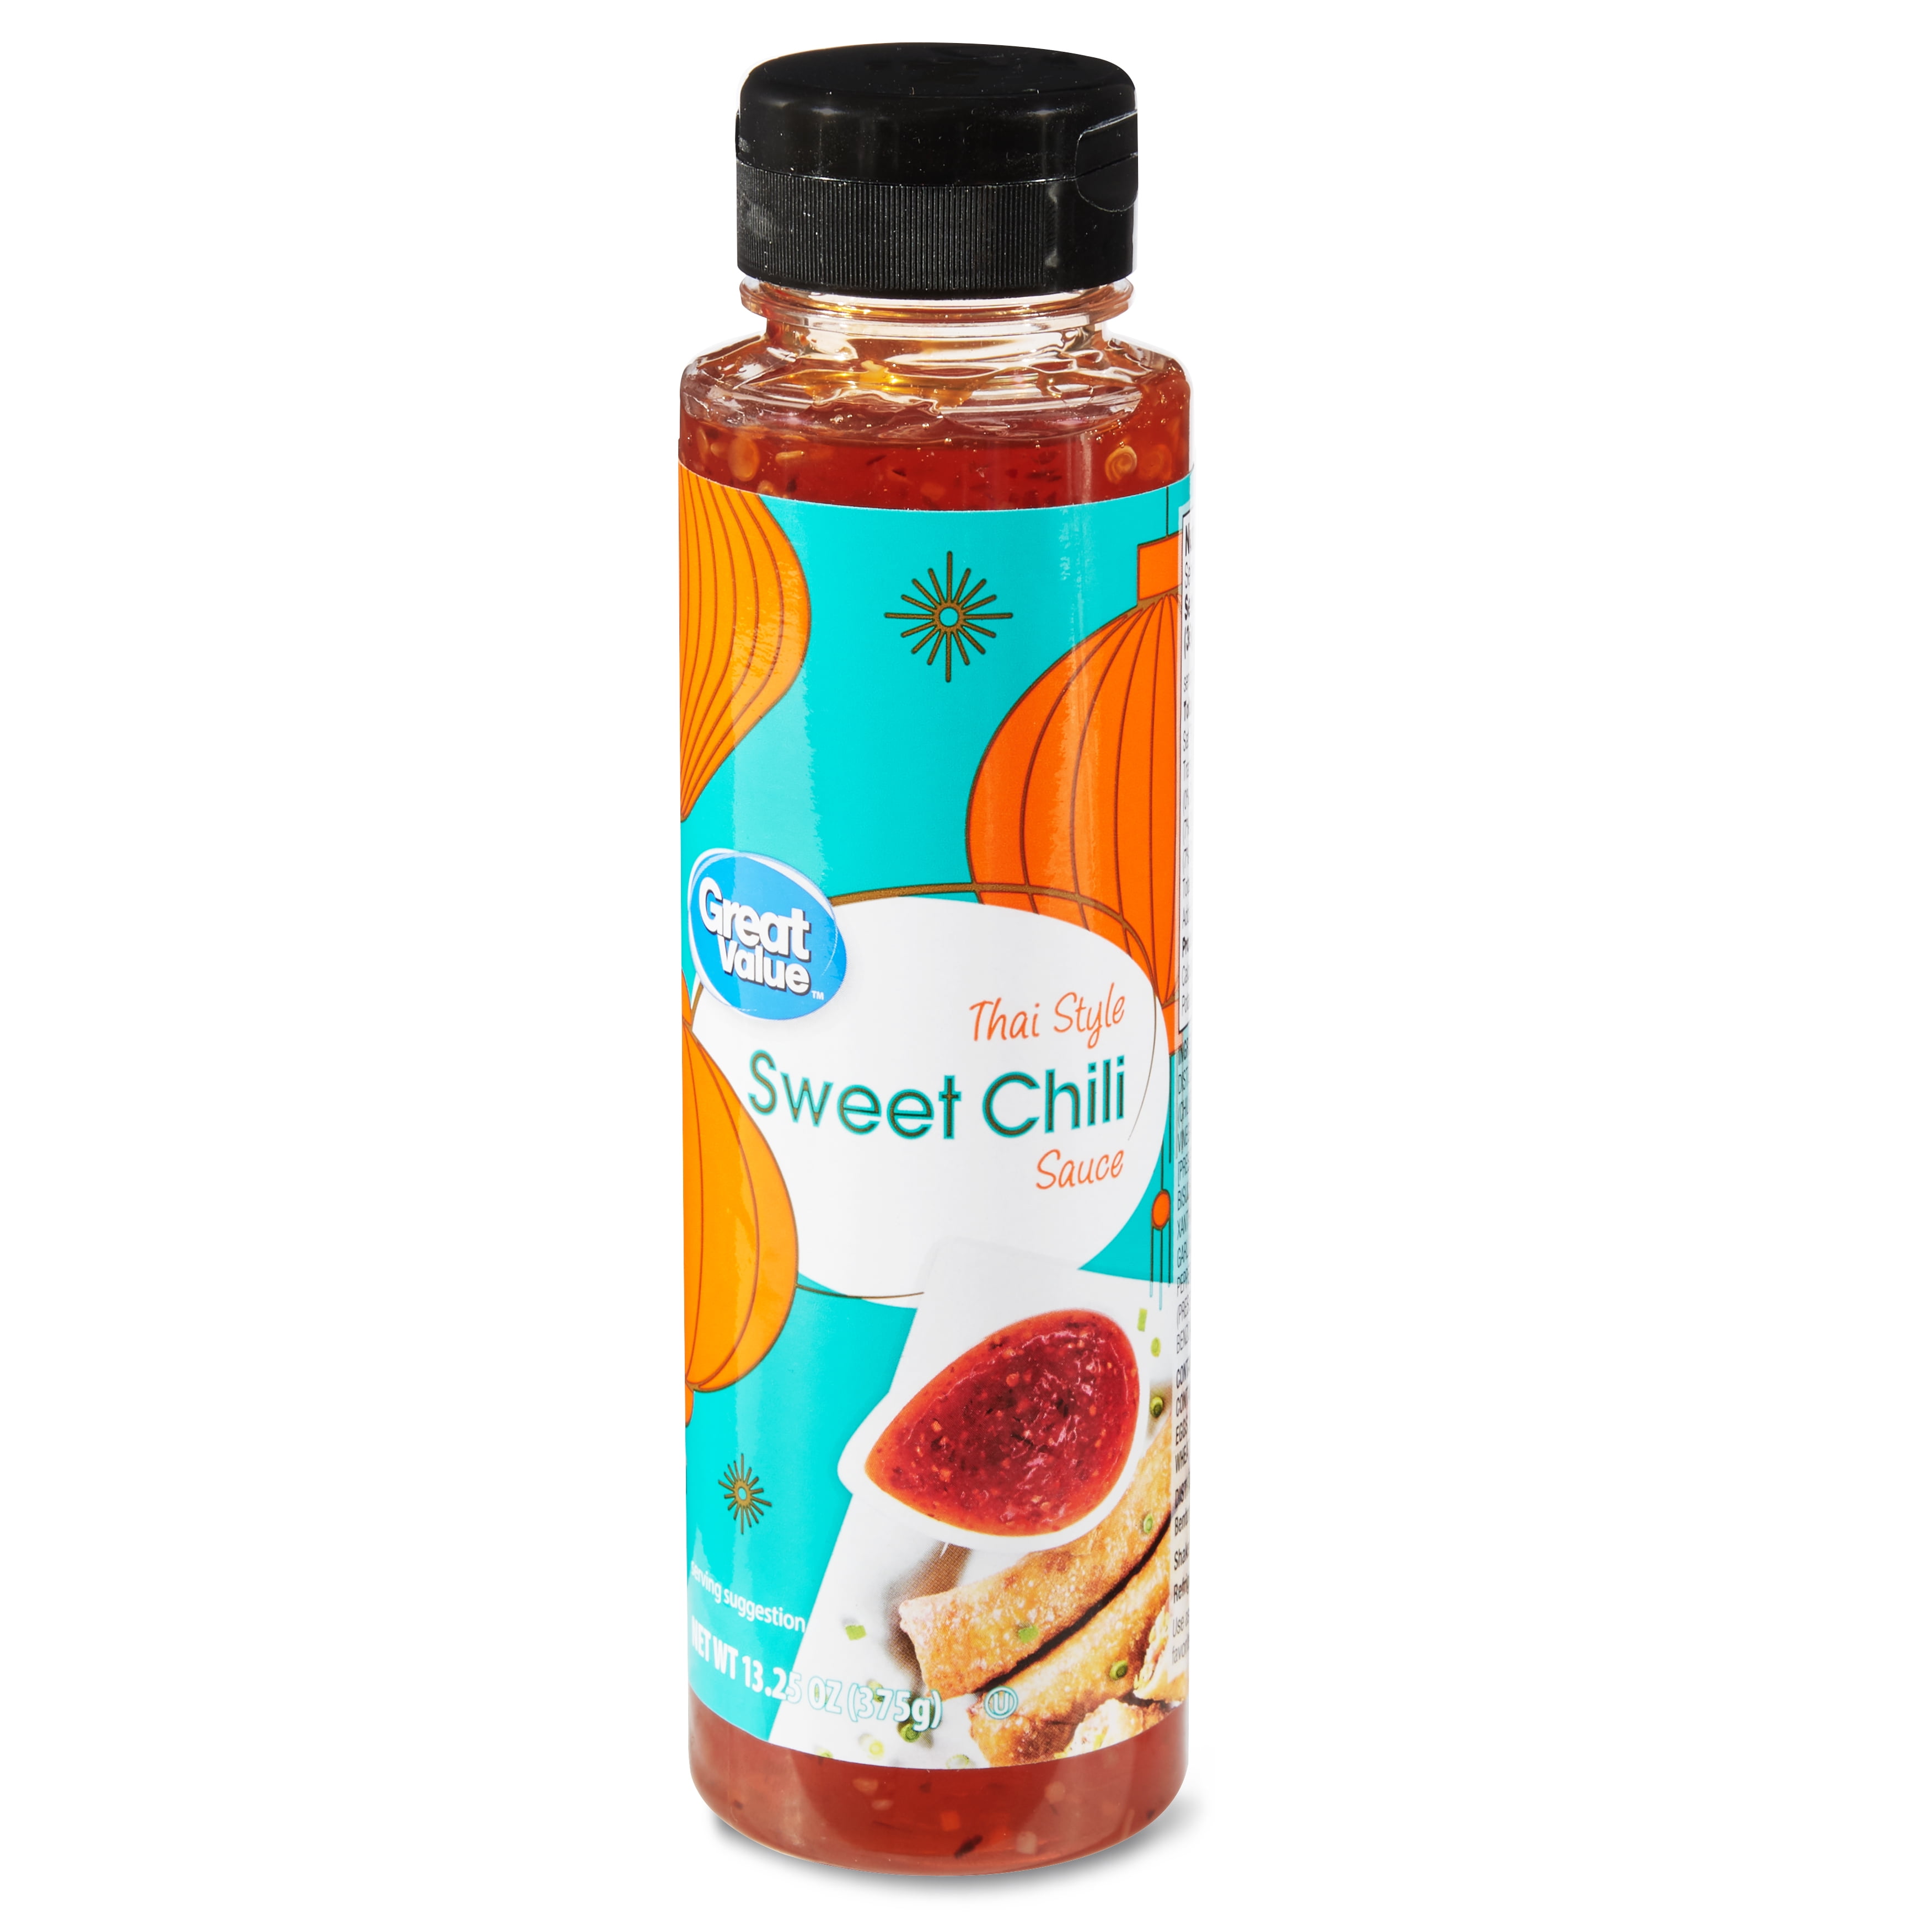 Great Value Thai Style Sweet Chili Sauce 13 25 Oz Walmart Com Walmart Com